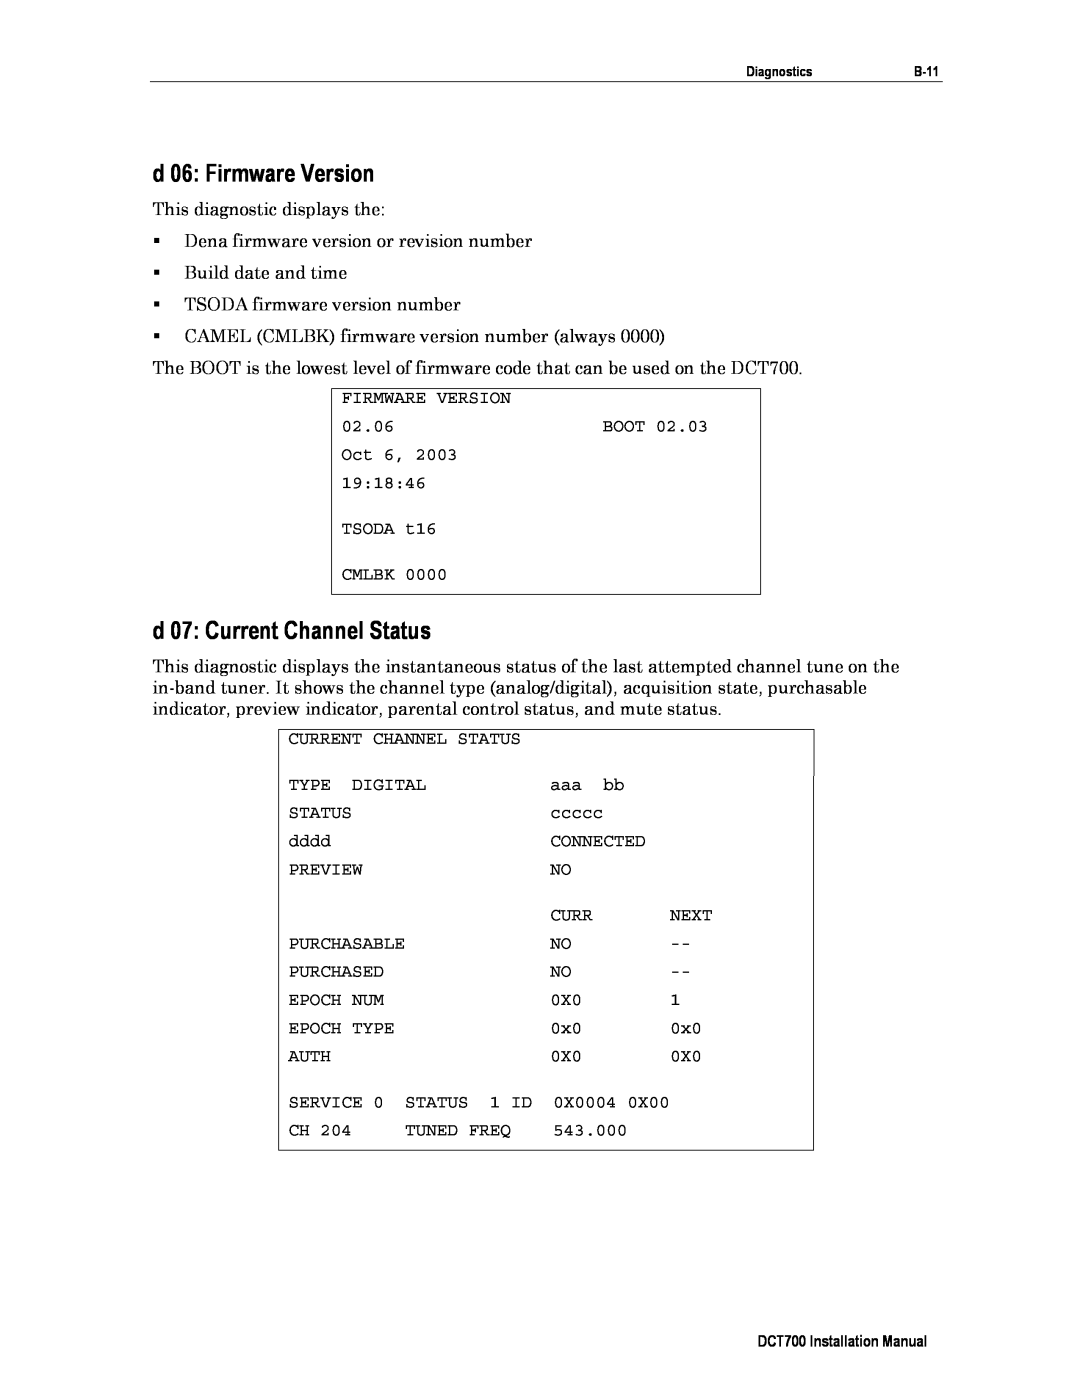 Motorola DTC700, DCT700 installation manual d 06: Firmware Version, d 07: Current Channel Status 